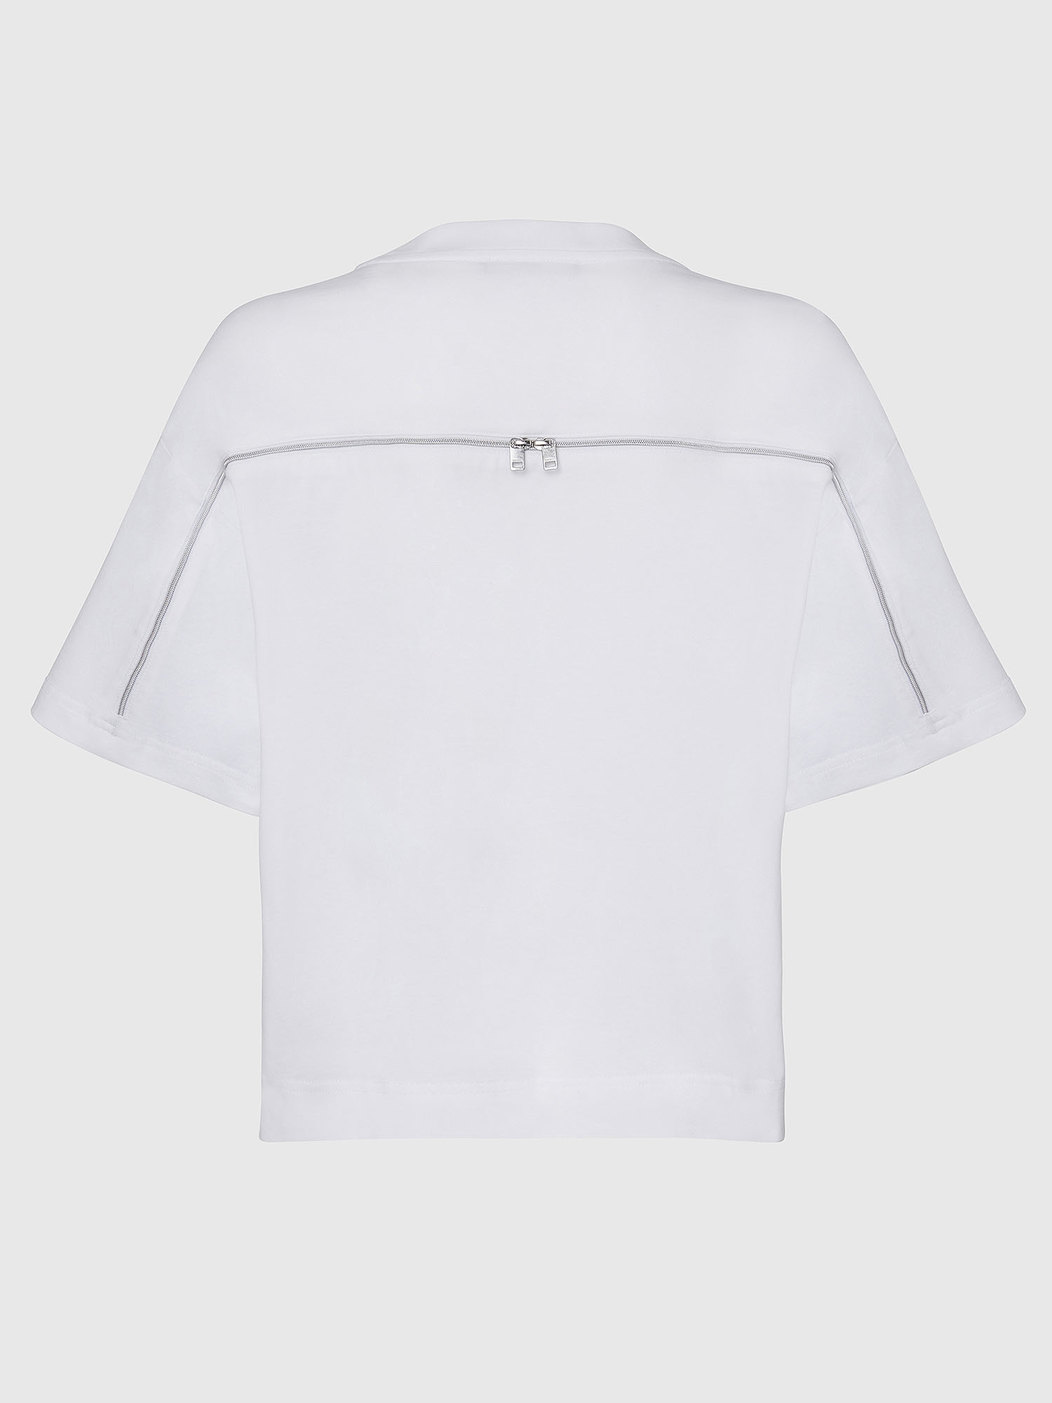 T-Shirt With Trompe L'Oeil Necklace